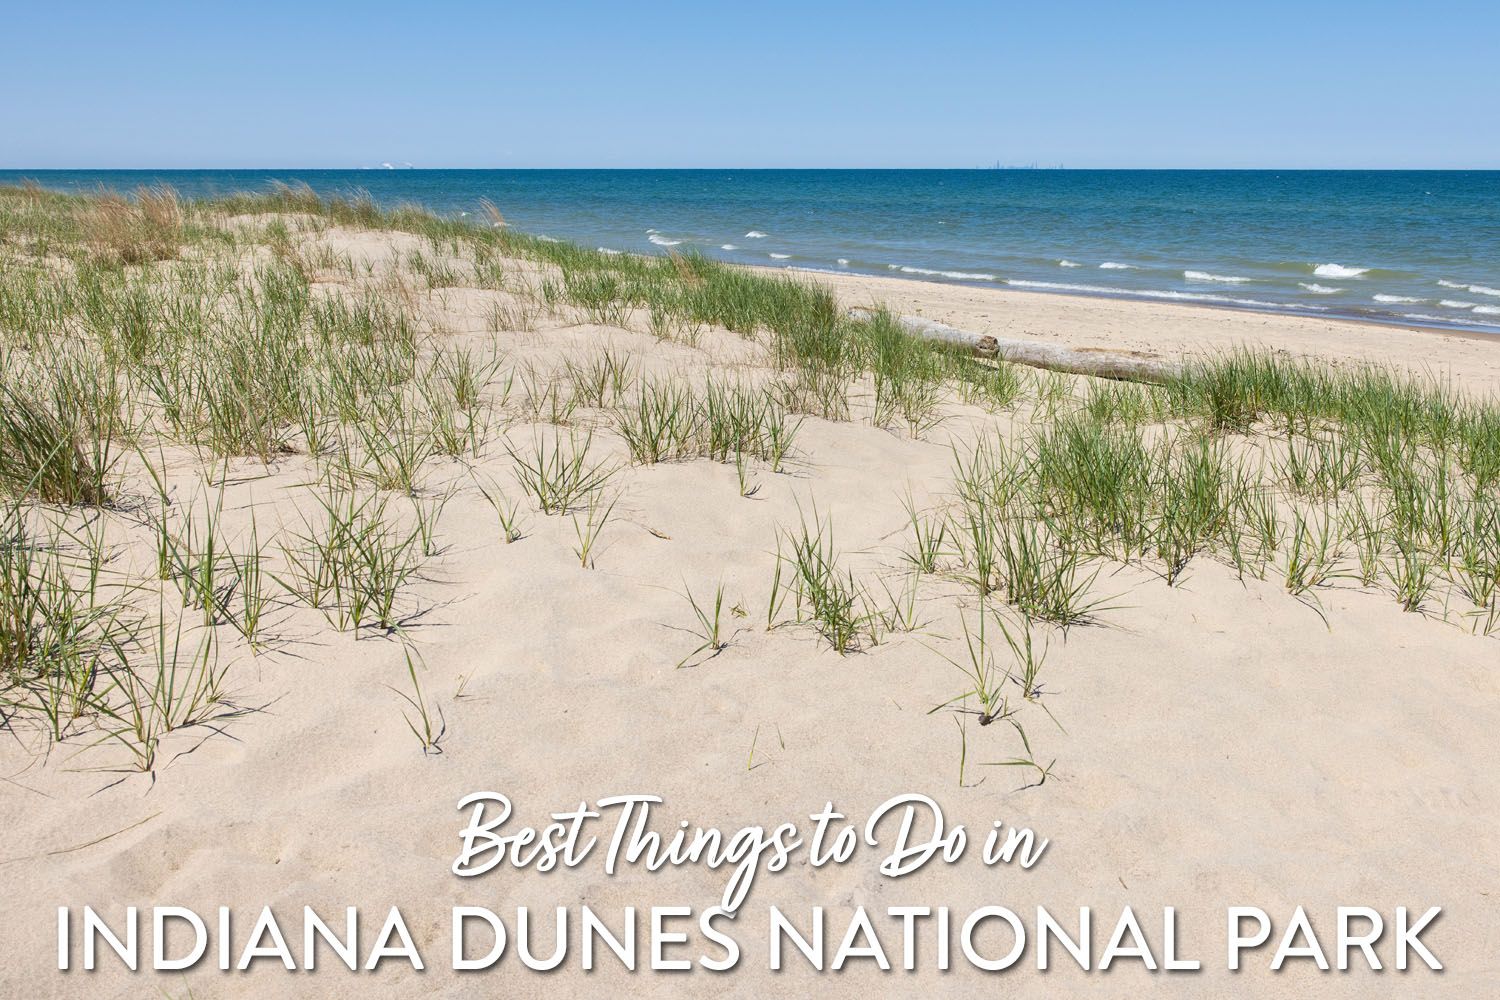 Indiana Dunes